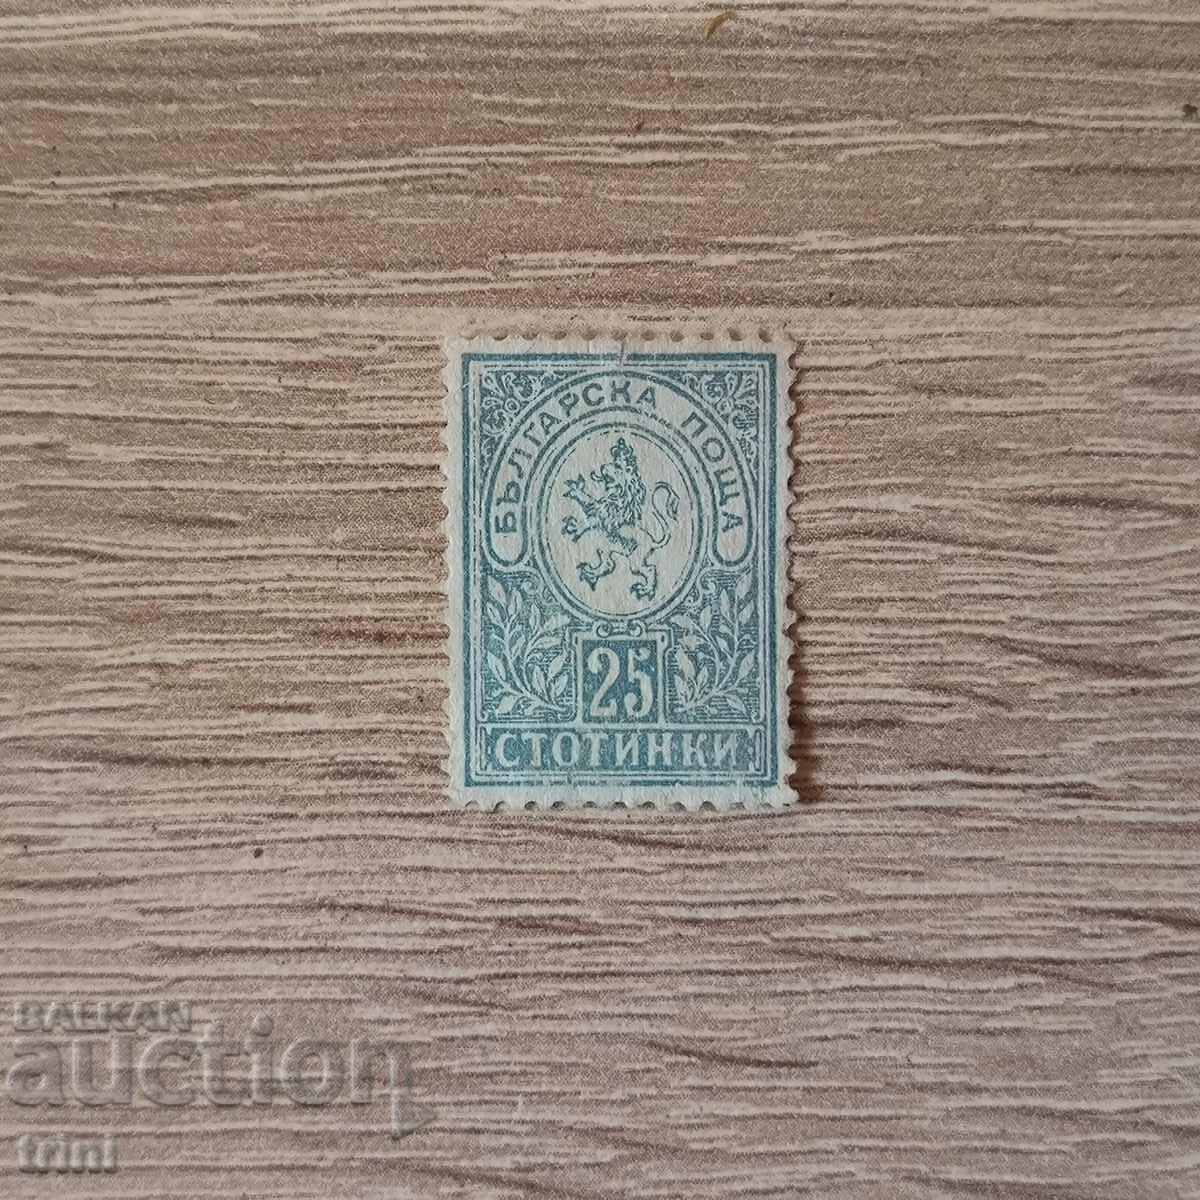 Bulgaria Small Lion 1889 25 cent